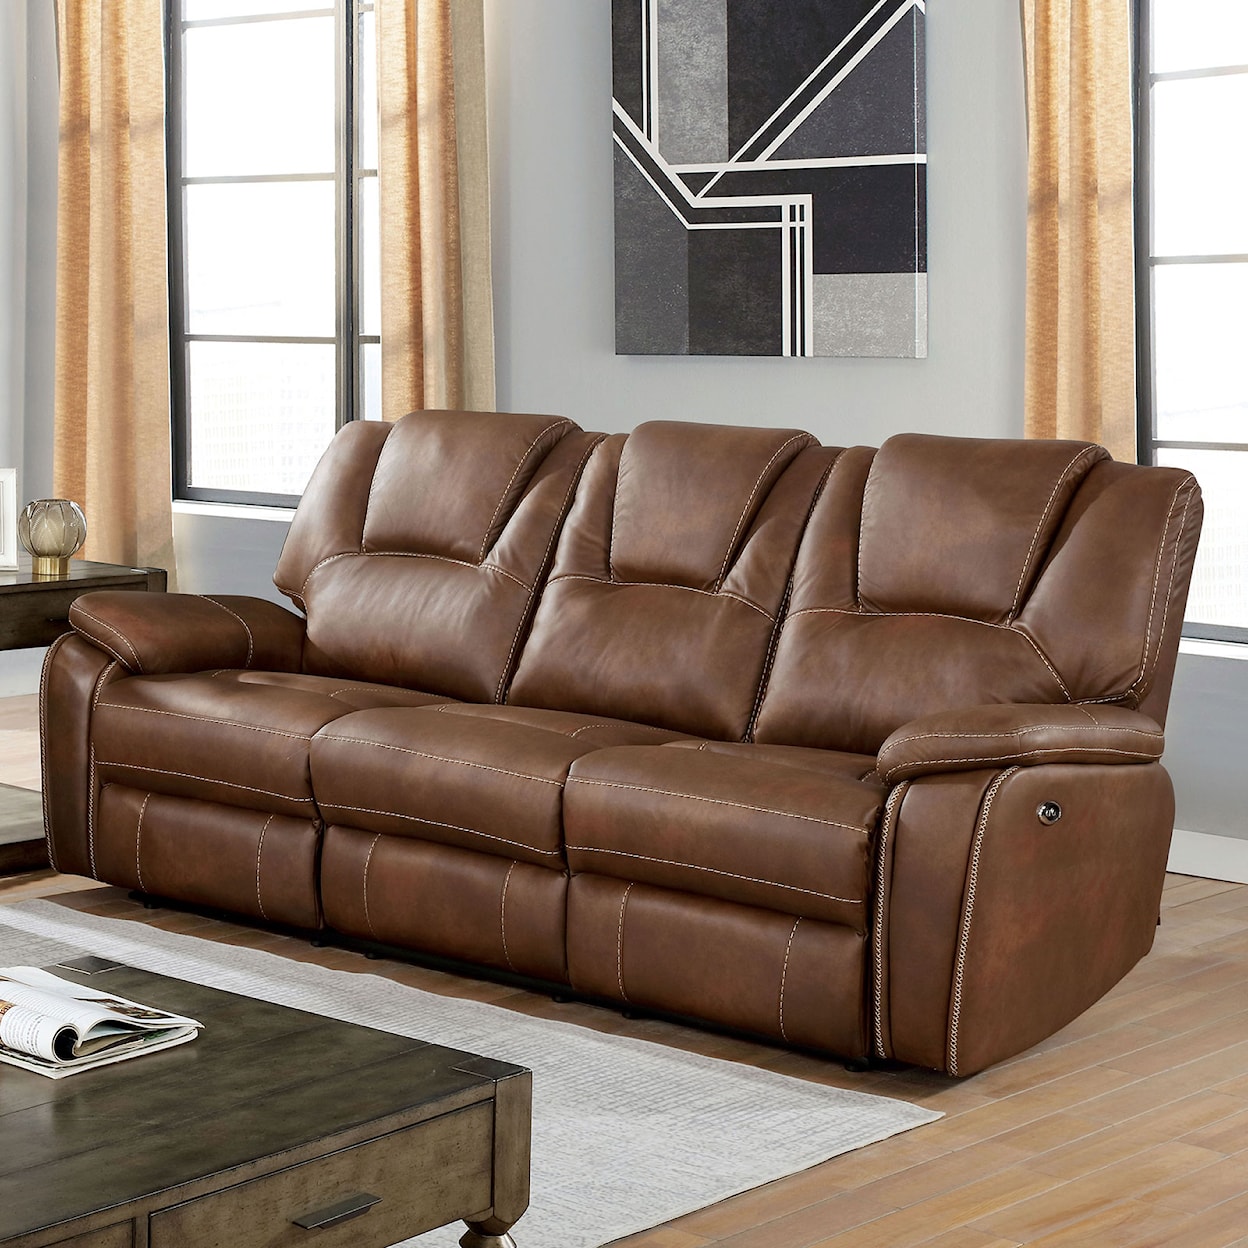 Furniture of America Ffion Power Sofa